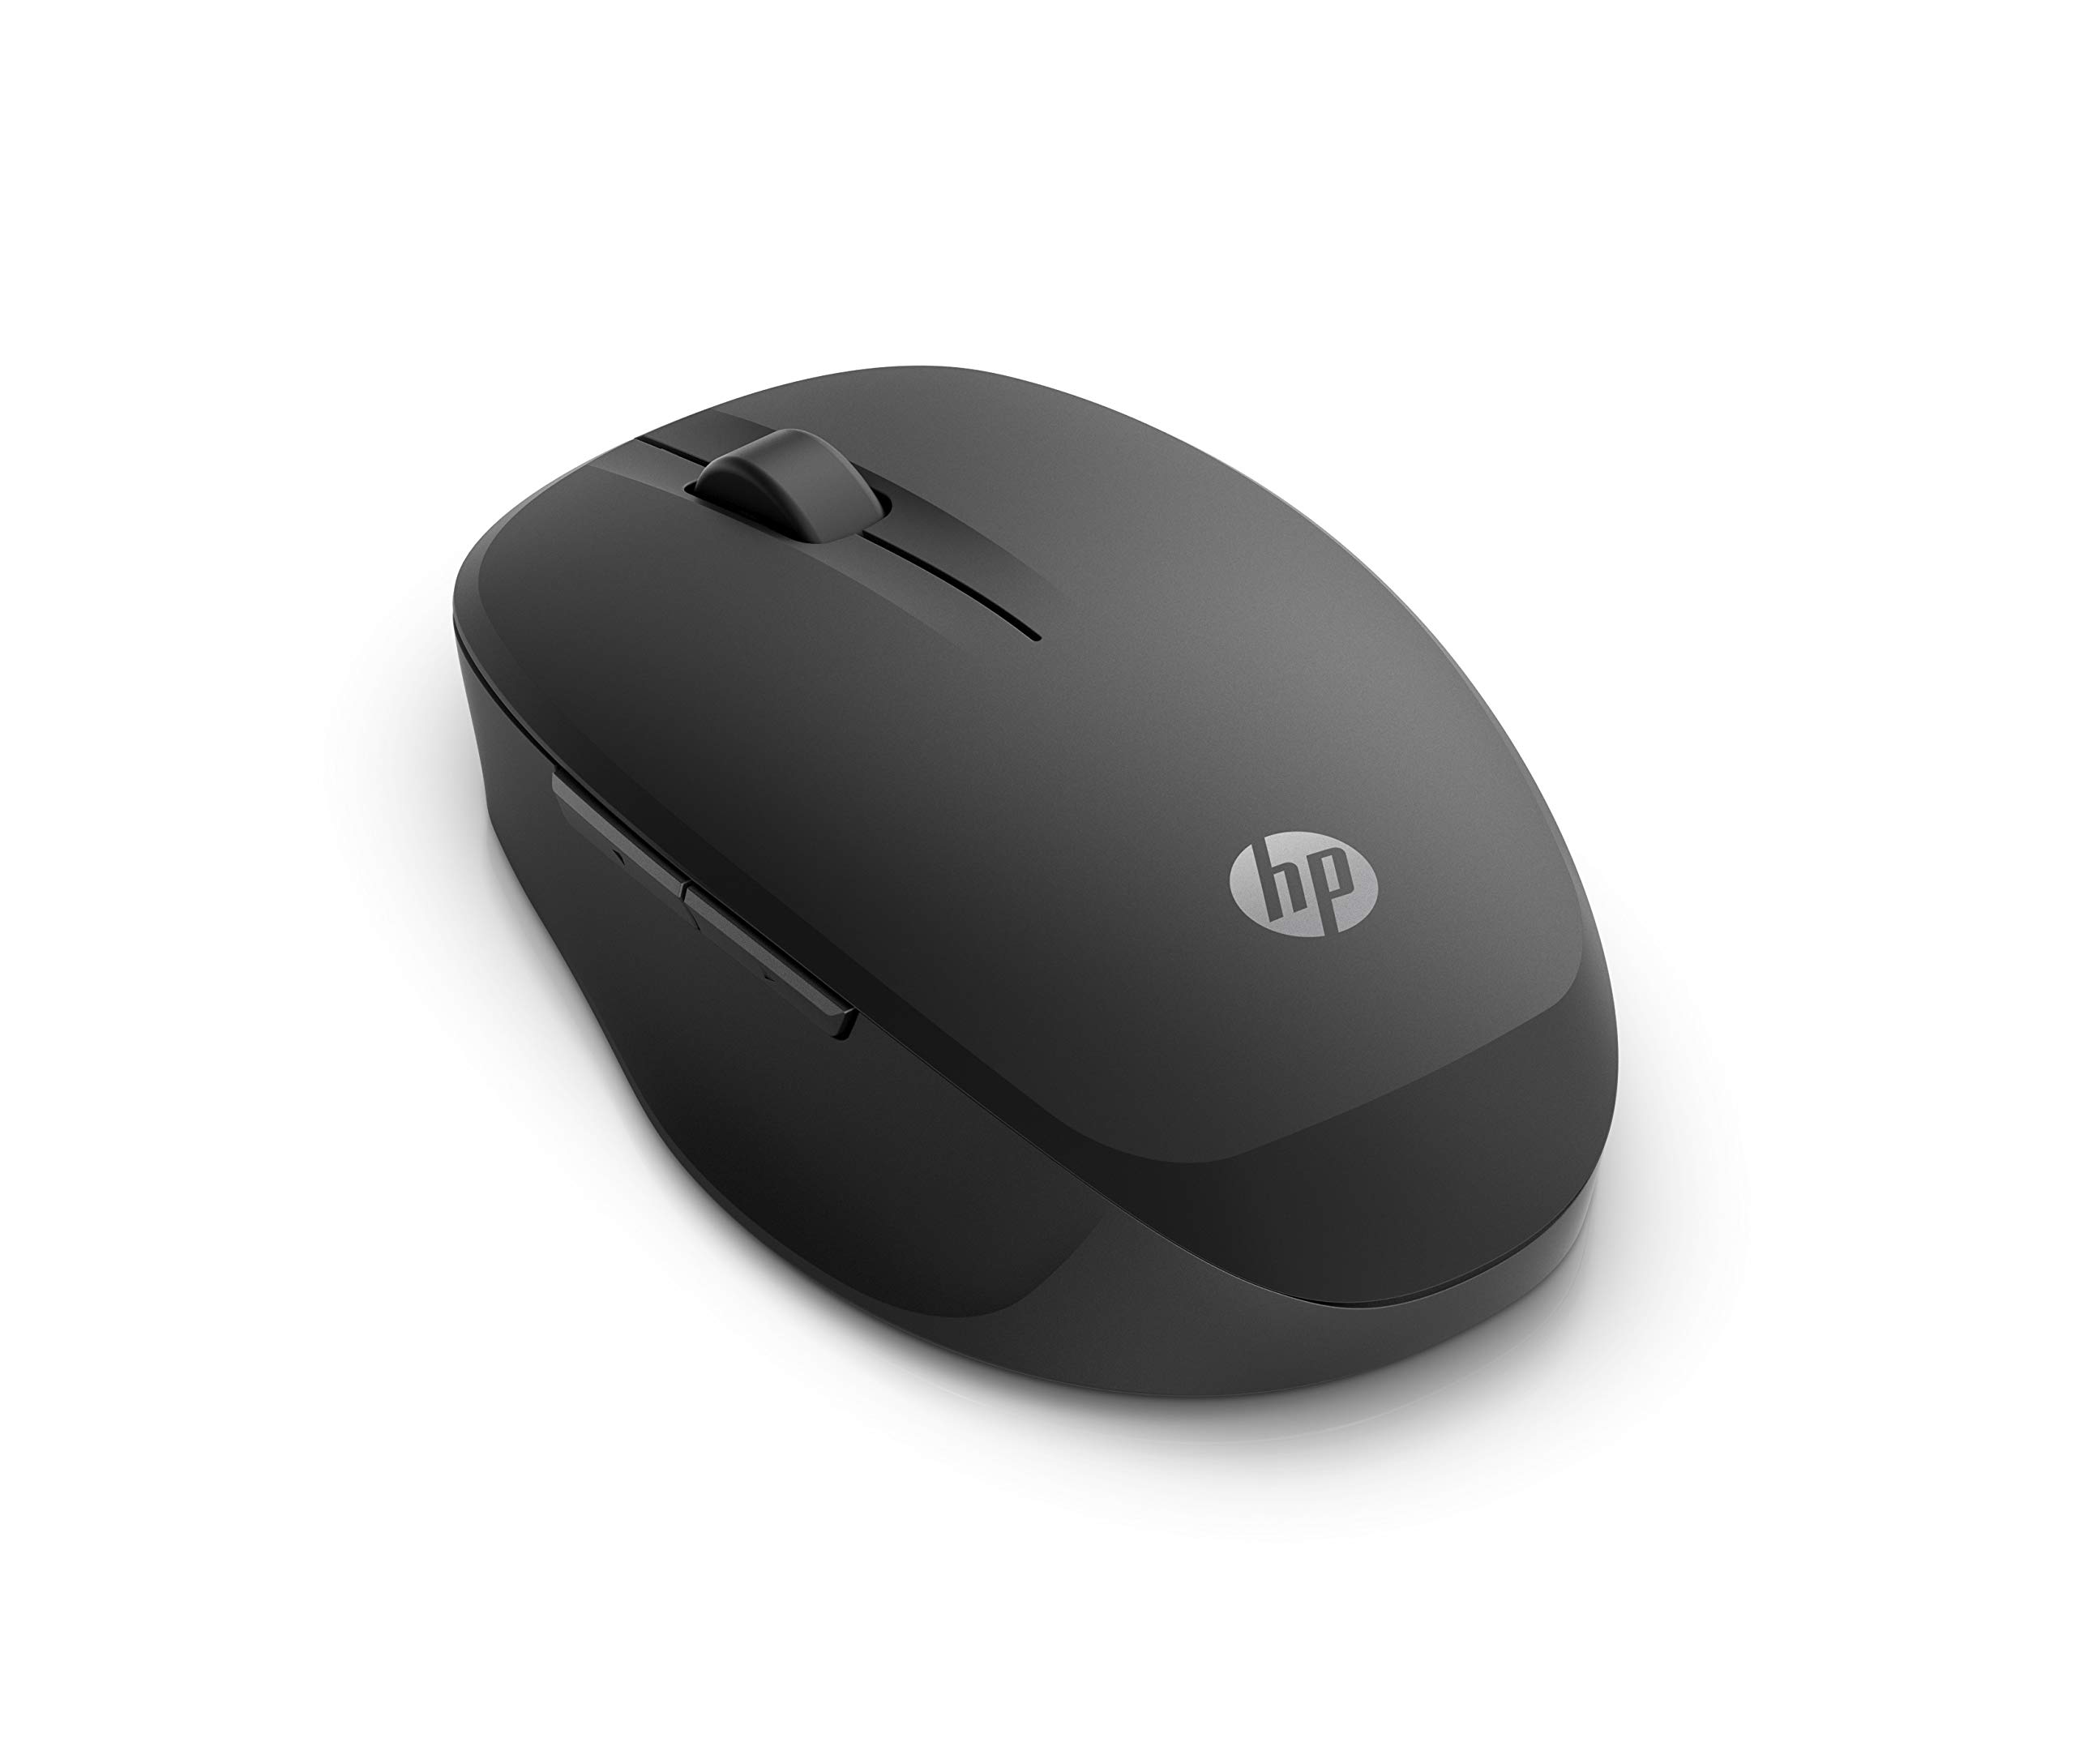 HP マウス ブラック Bluetooth 無線 ワイヤレス 5ボタン戻る/進むボタン搭載HP 300 2way ブルートゥース(？型番:6CR71AA#UUF) Mac Window